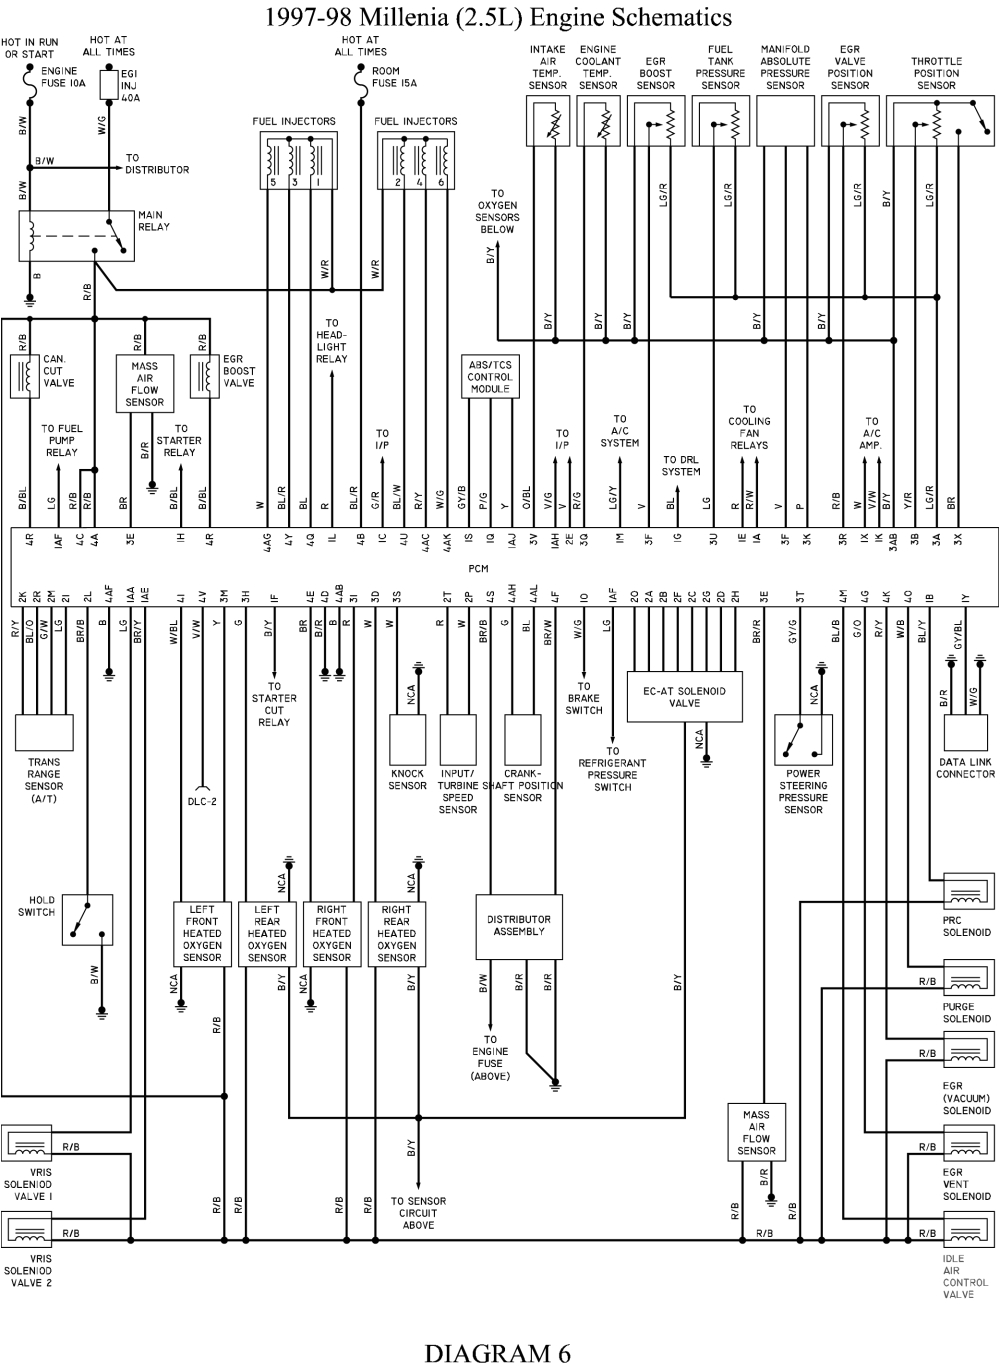 fig repair guides wiring diagrams